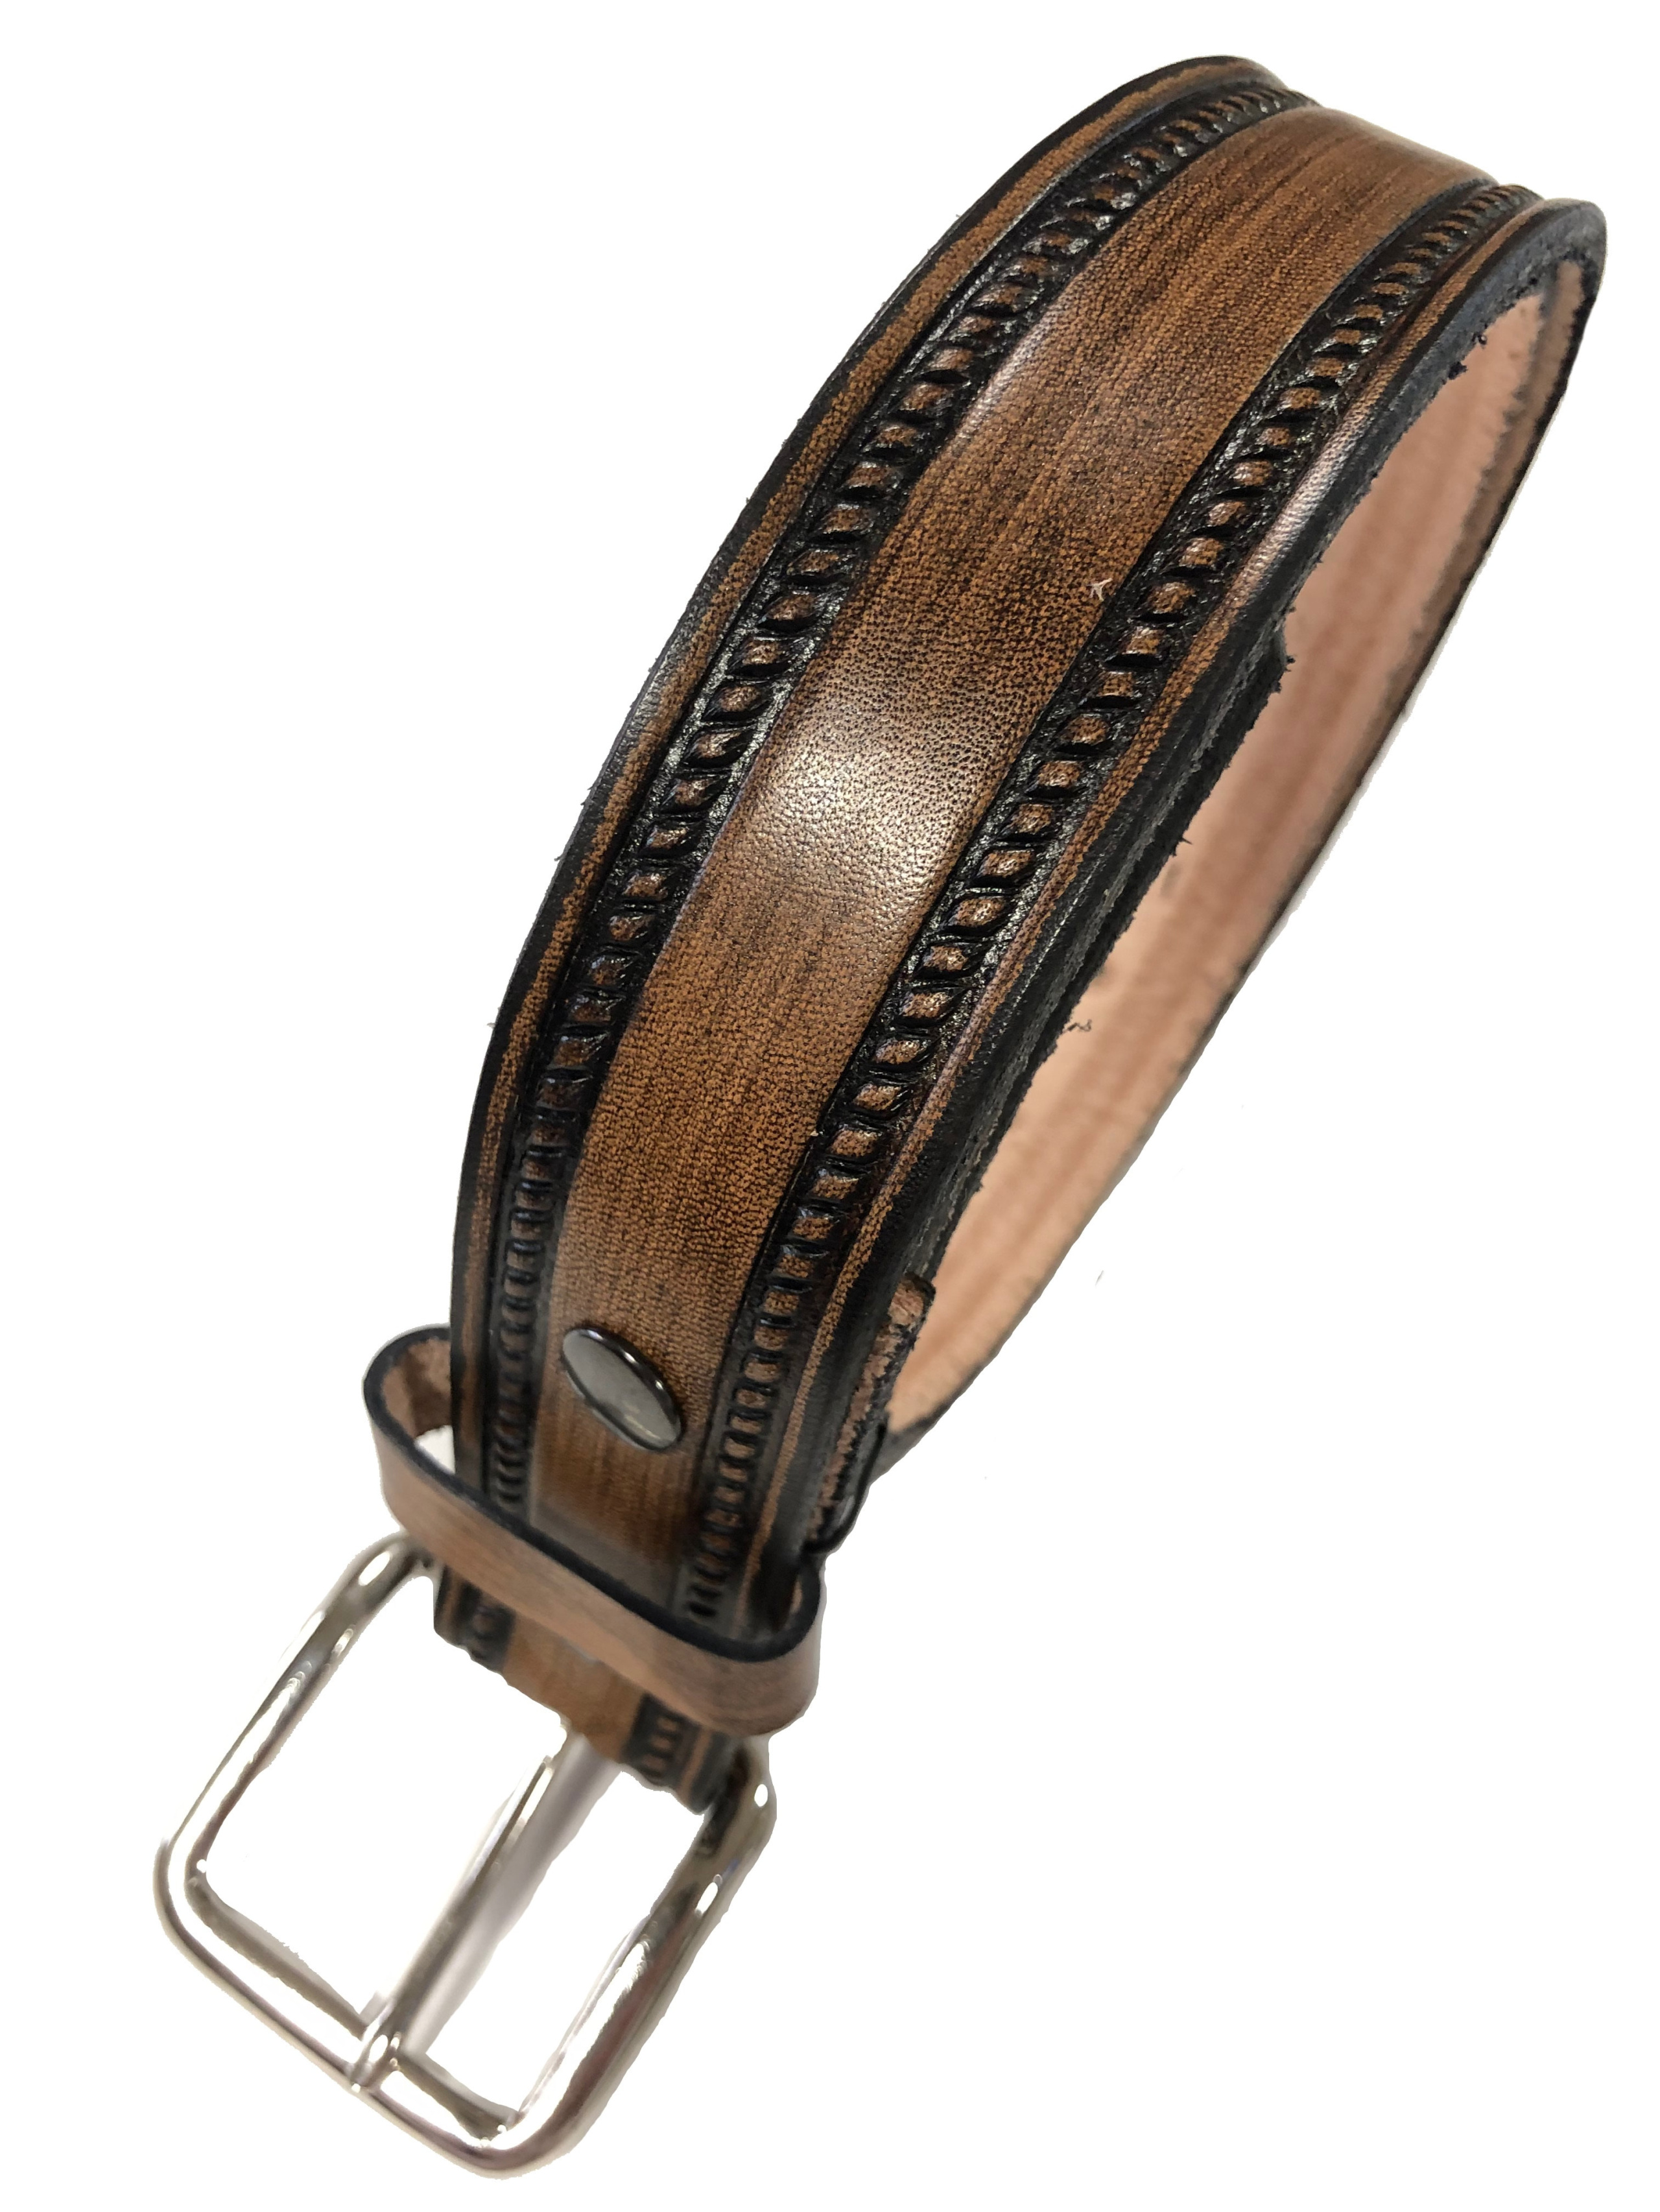 Rope Design Handmade Mens Leather Belt 1.5" wide Work Casual Western